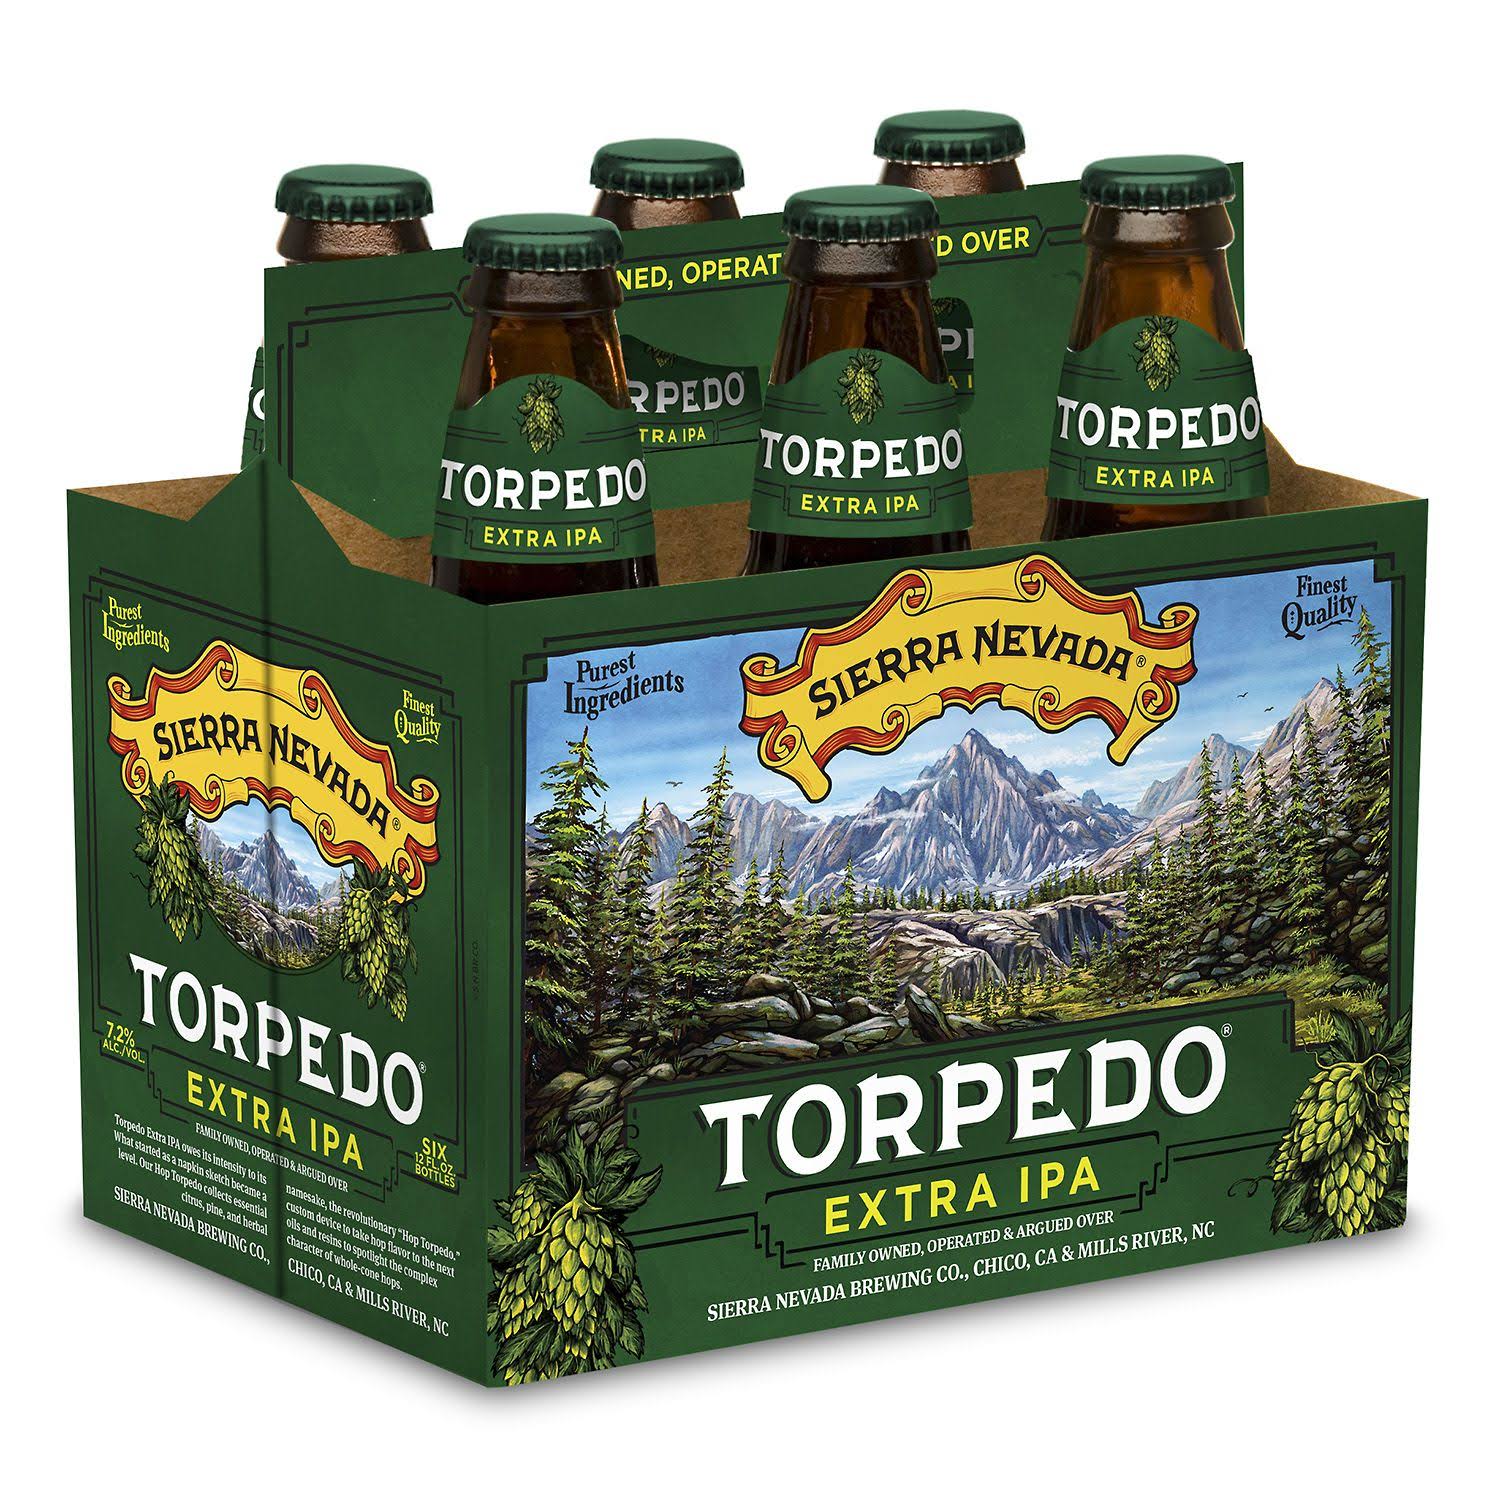 Sierra Nevada Torpedo Extra IPA - 6 pack, 12 fl oz bottles